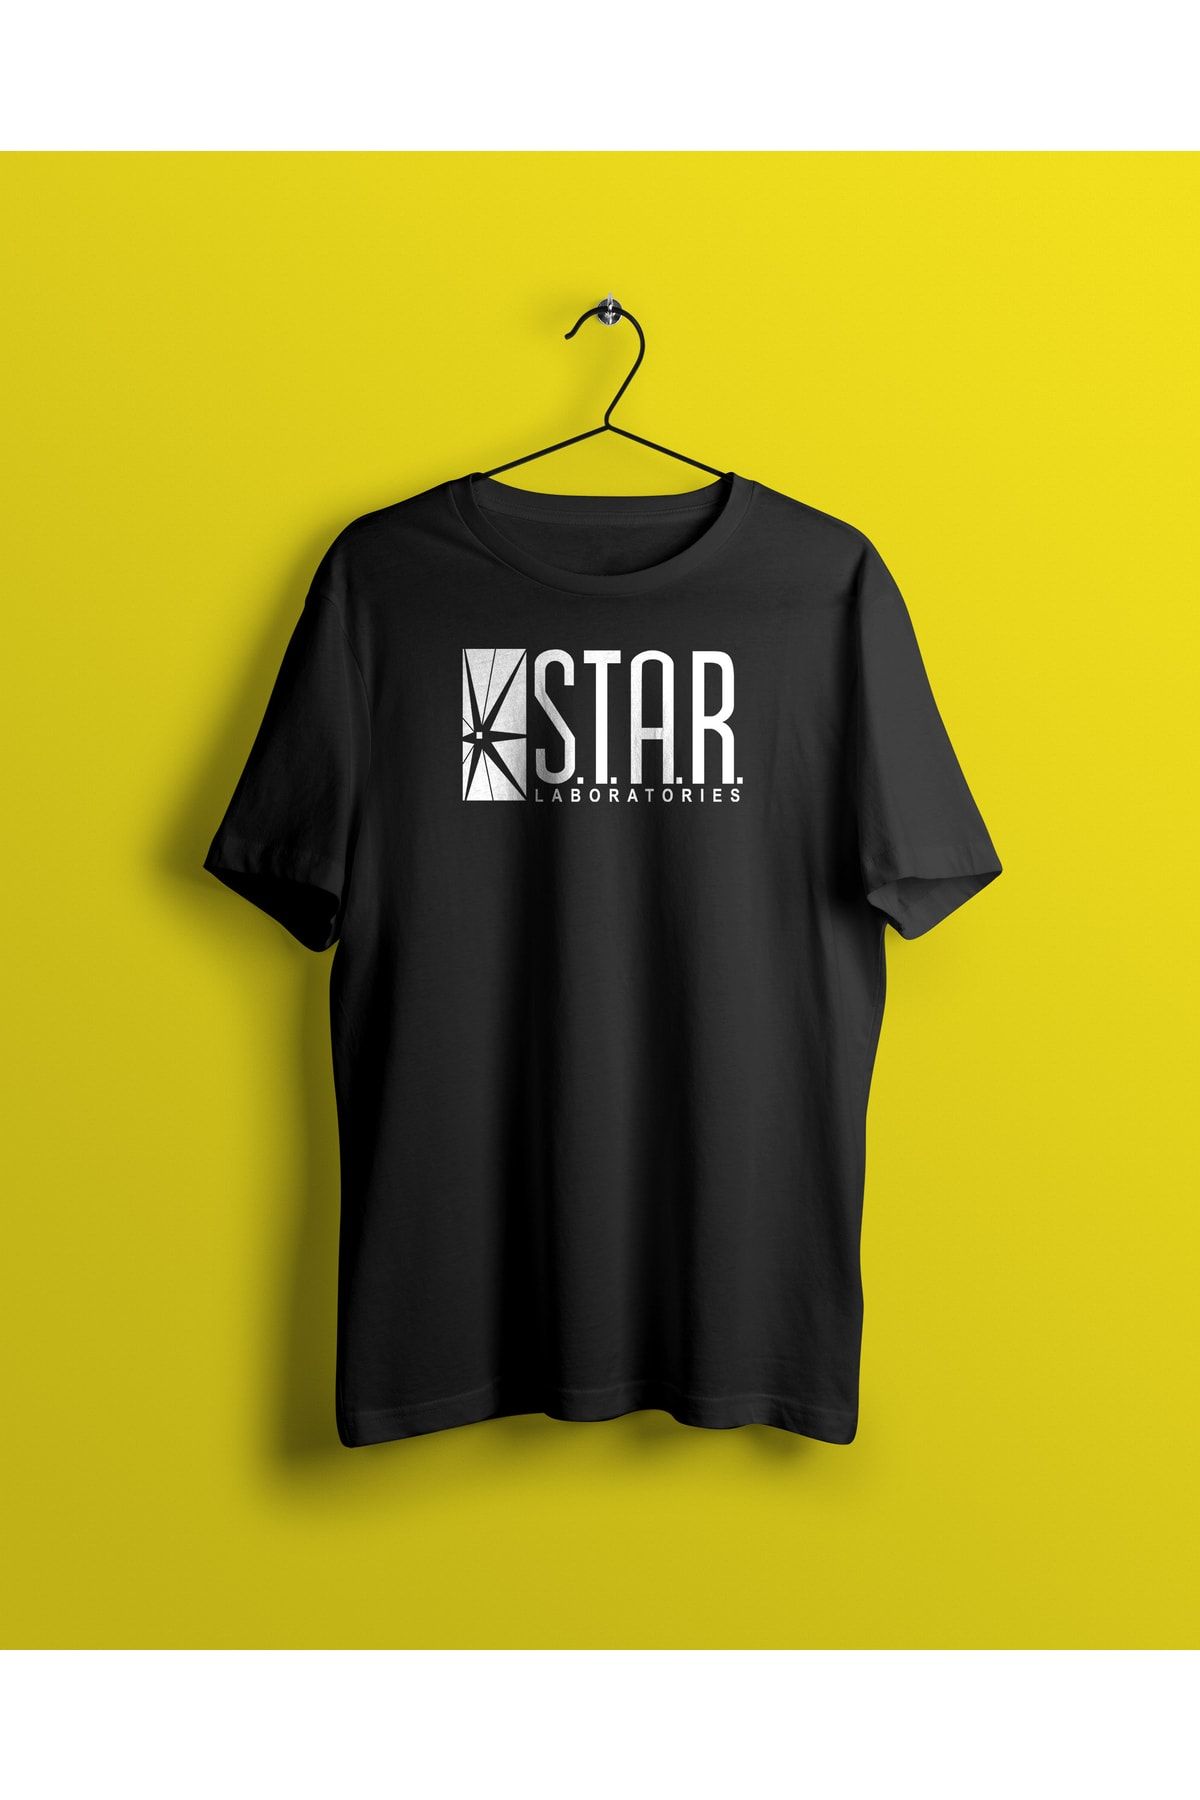 YEACHY Unisex Siyah The Flash Star Laboratories Baskılı T-shirt